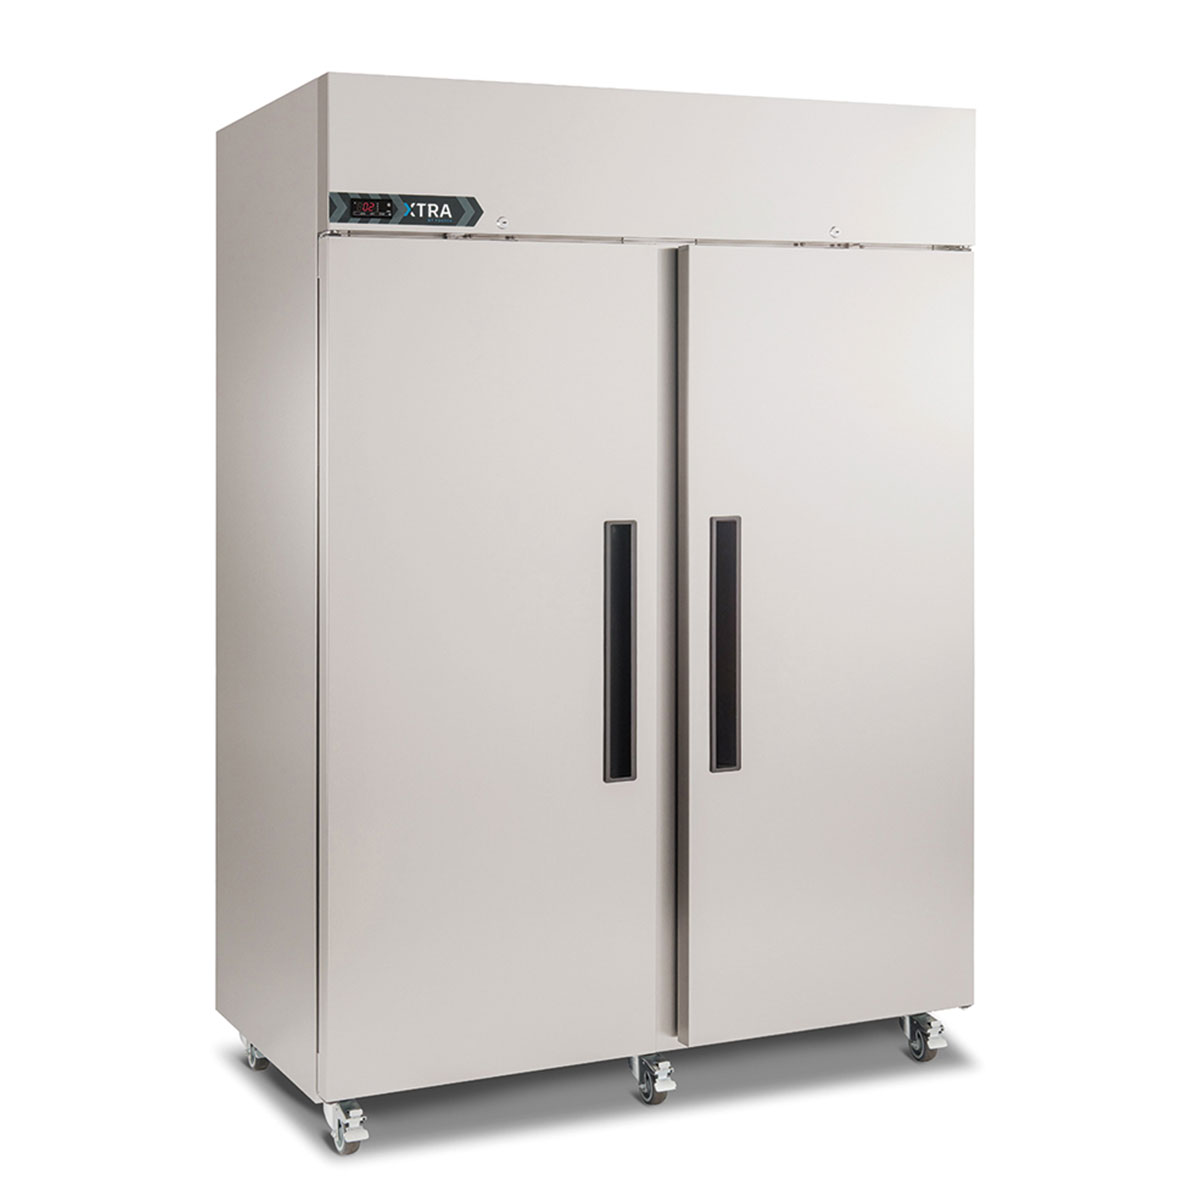 Foster xtra Double Door 1 - Refrigeration Equipment Suppliers in Cornwall